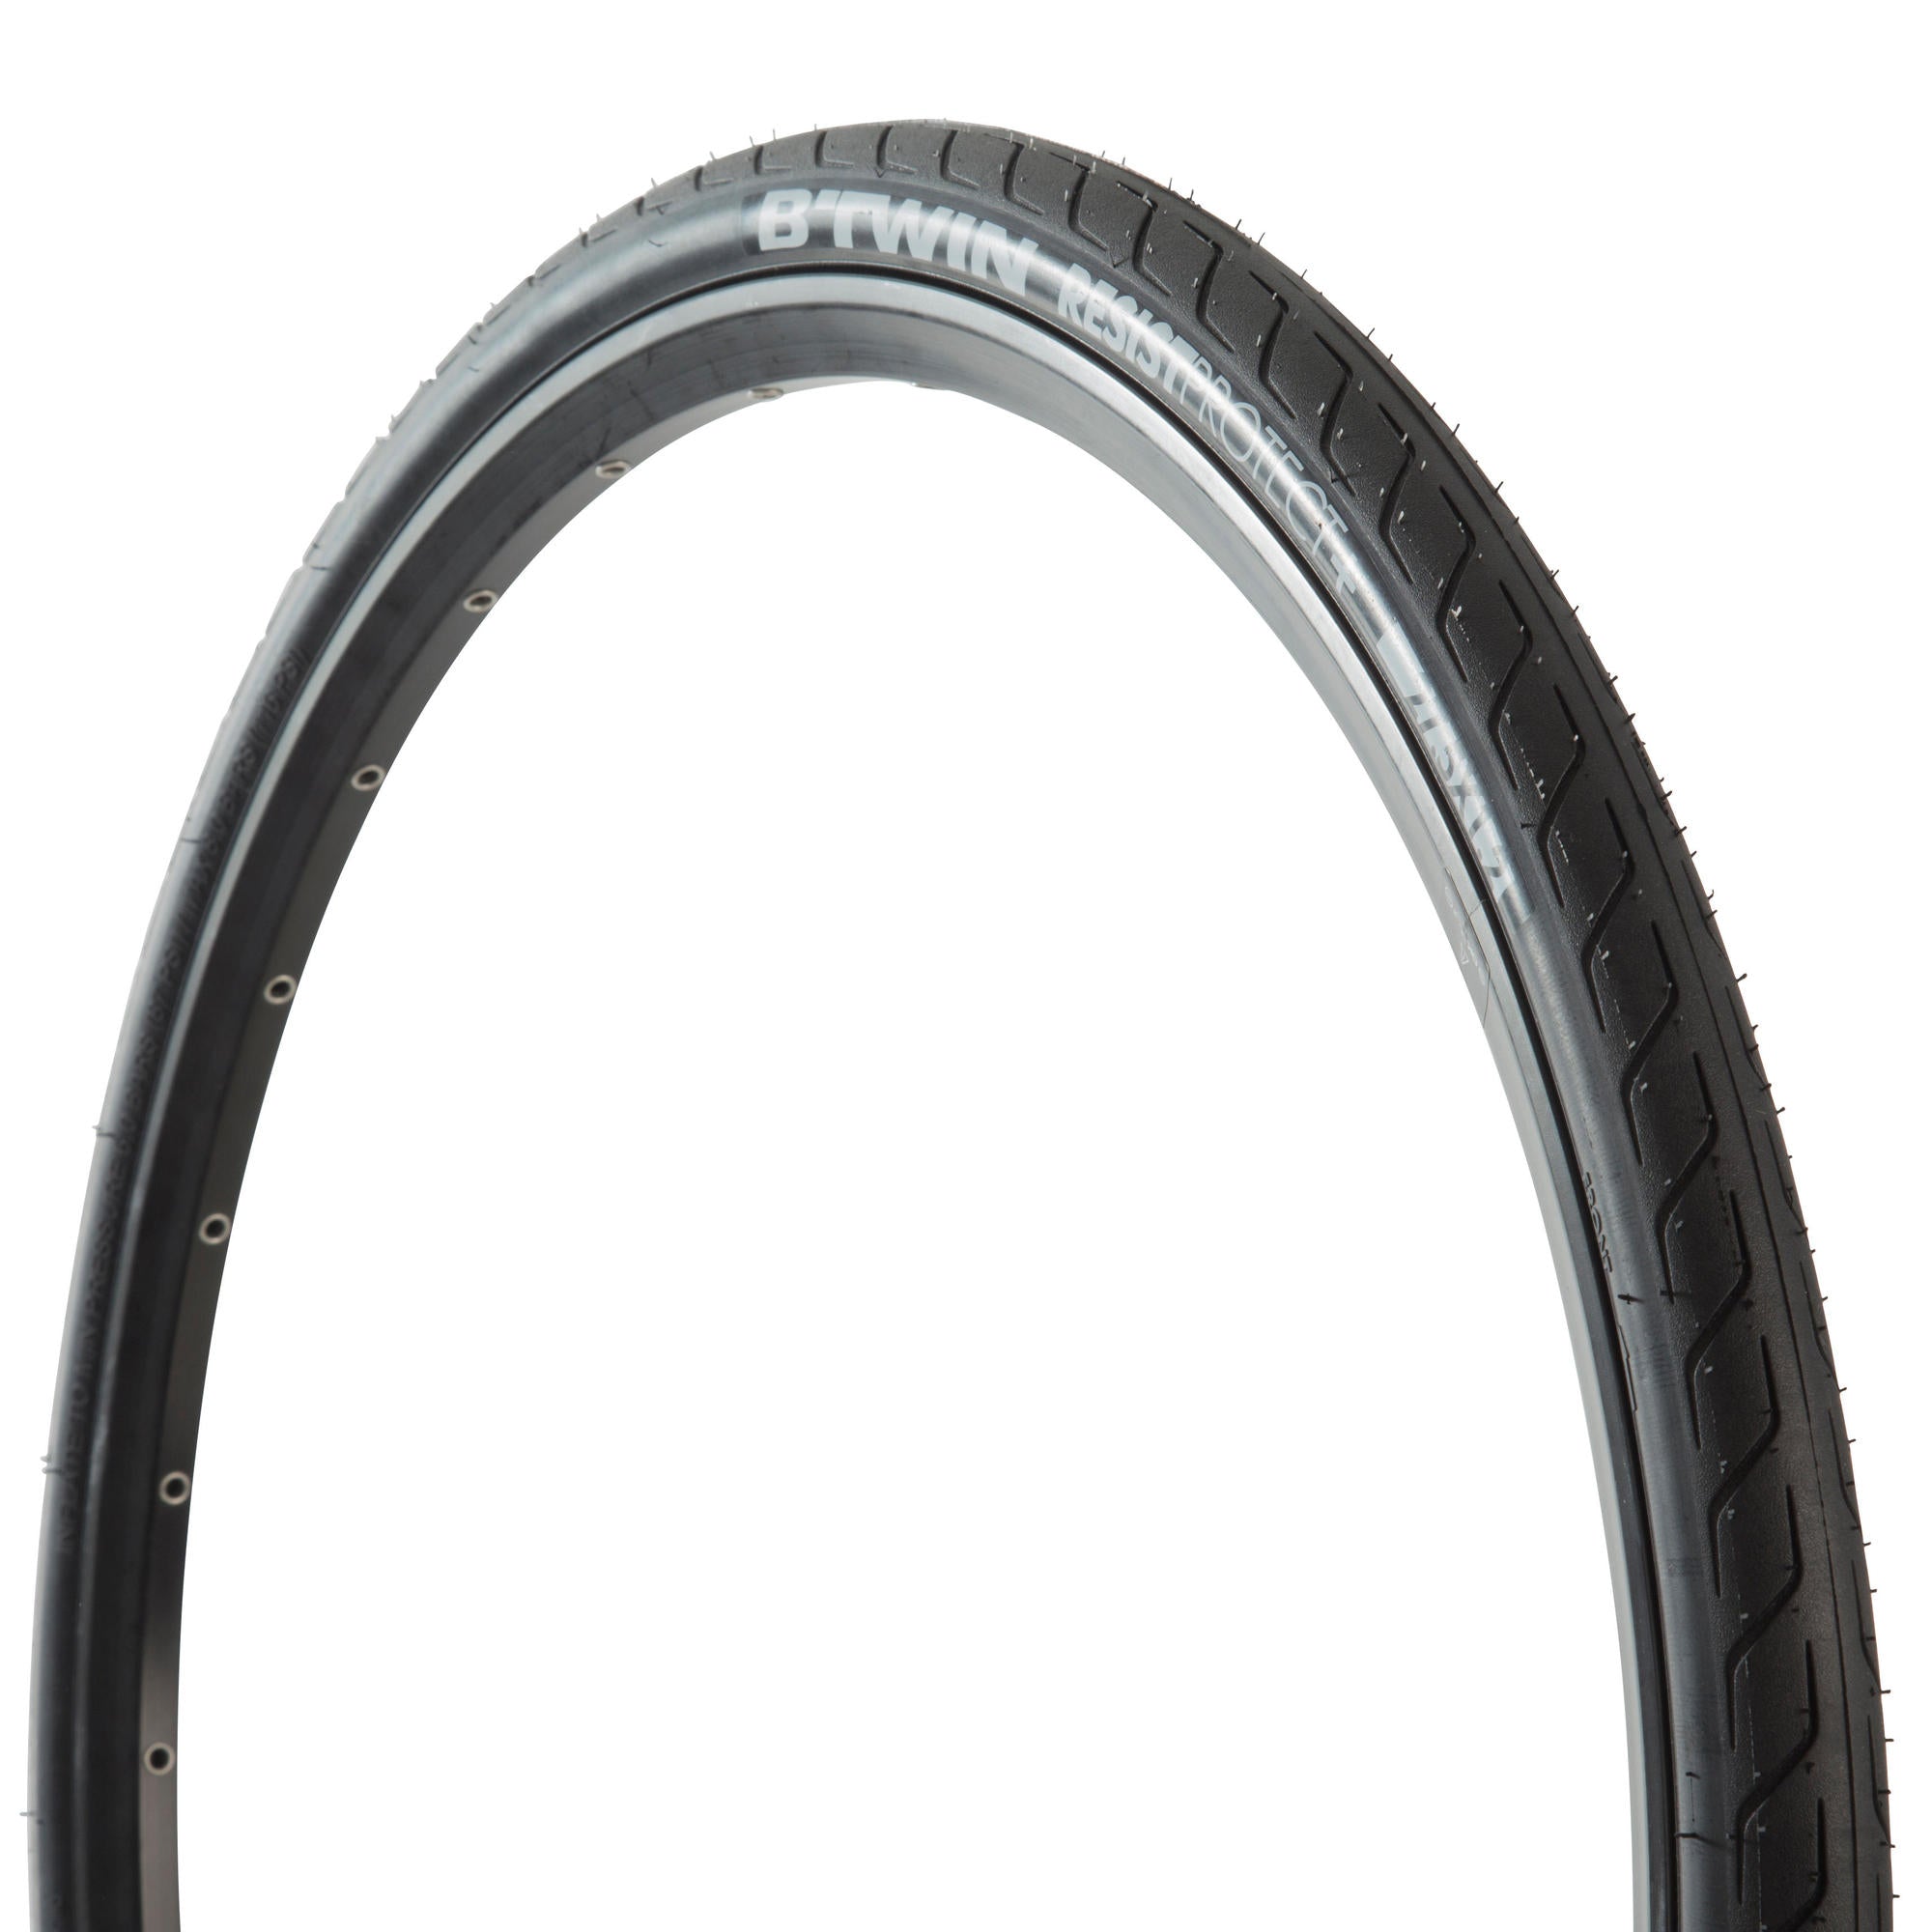 650b slick tyres